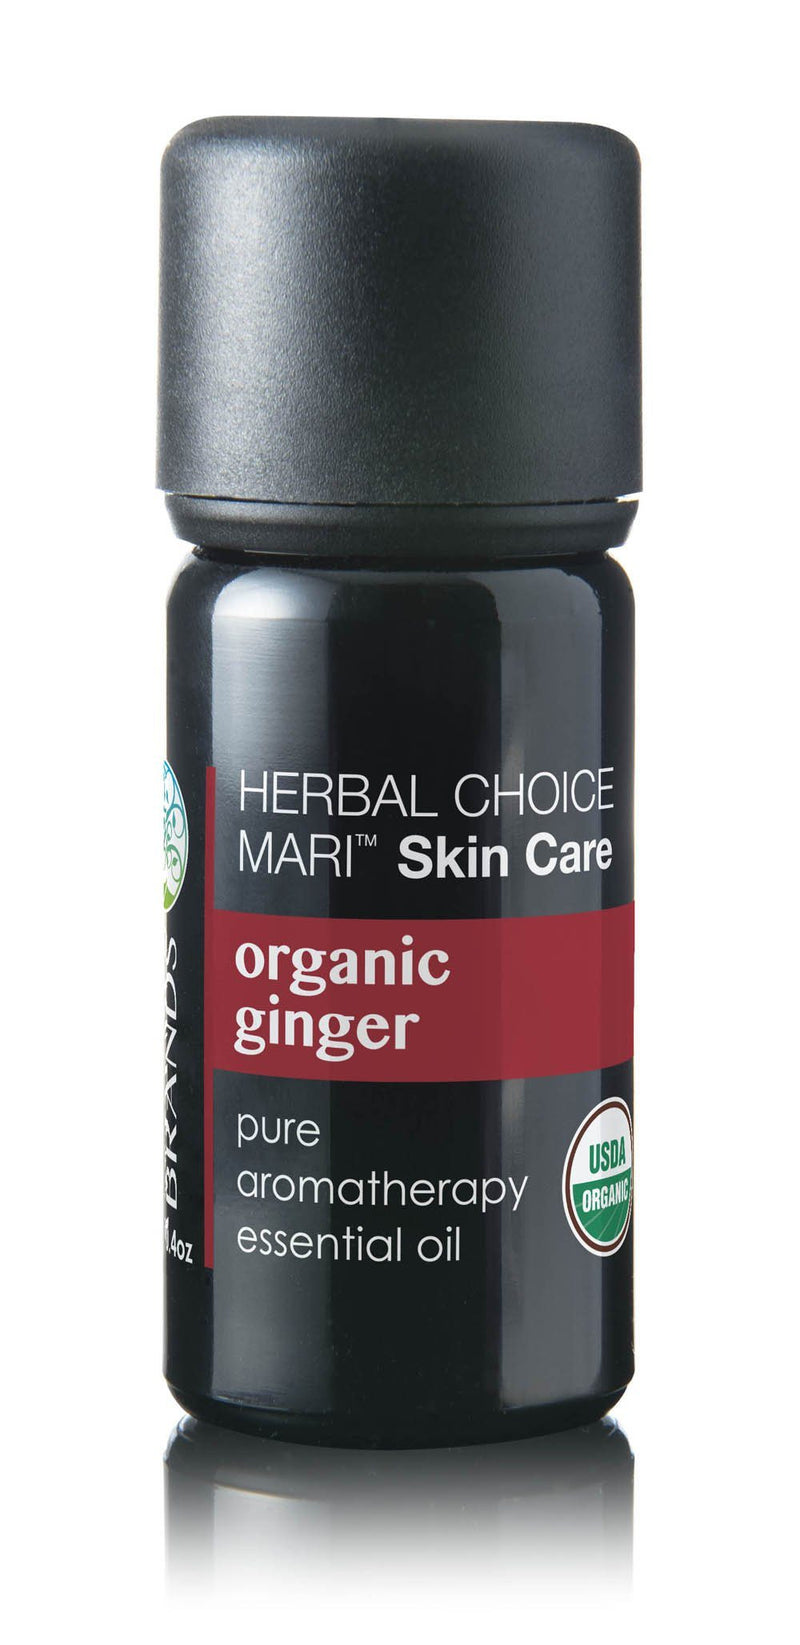 Herbal Choice Mari Organic Ginger Essential Oil; 0.3floz Glass - Herbal Choice Mari Organic Ginger Essential Oil; 0.3floz Glass - Herbal Choice Mari Organic Ginger Essential Oil; 0.3floz Glass